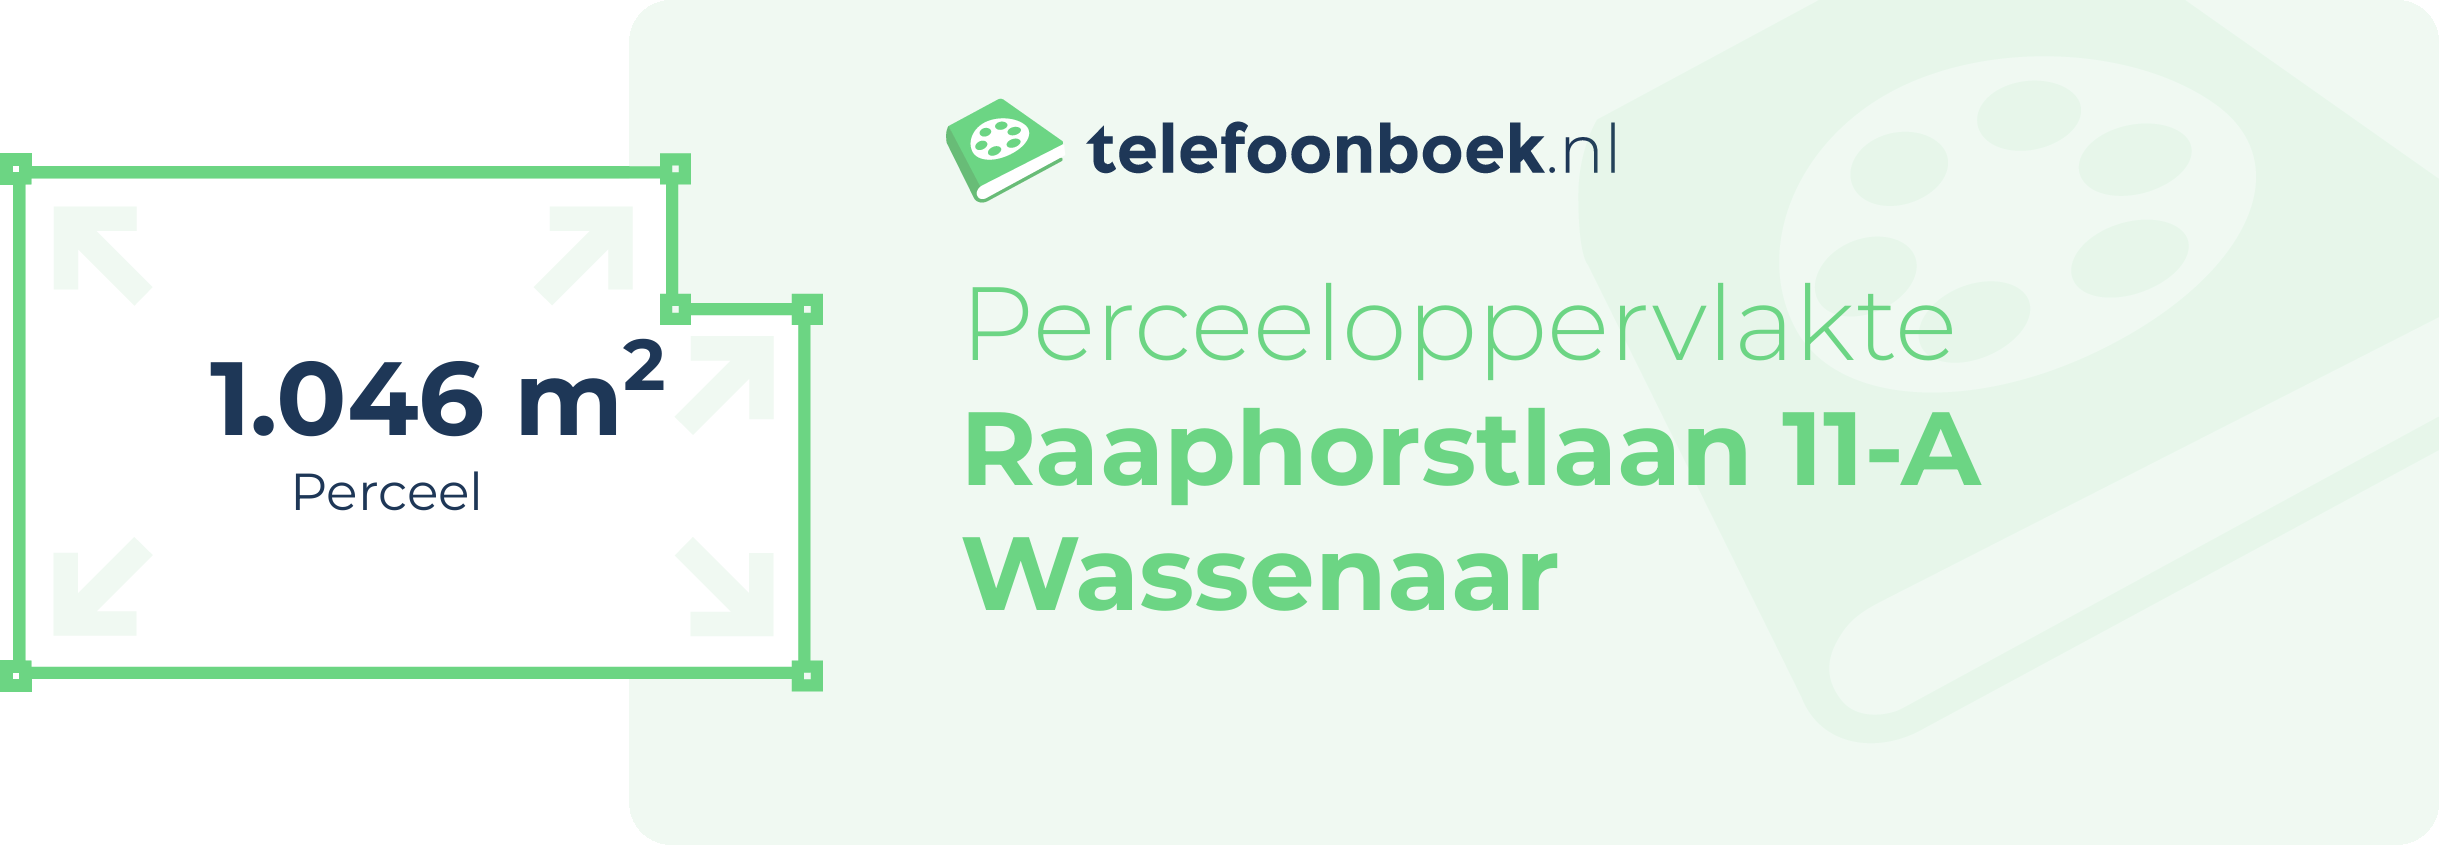 Perceeloppervlakte Raaphorstlaan 11-A Wassenaar